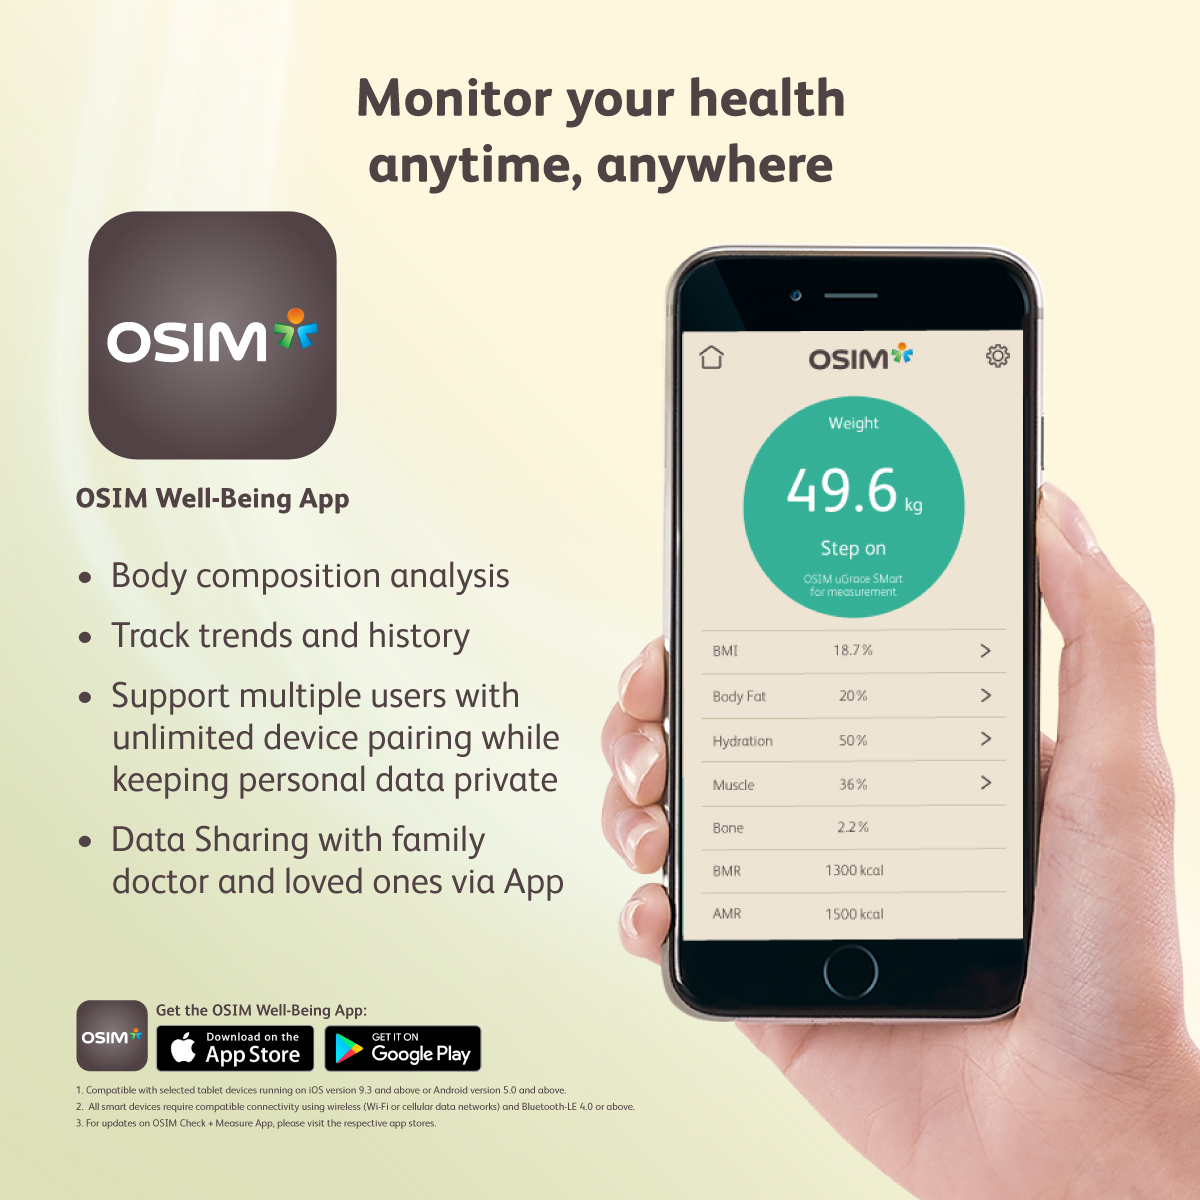 OSIM uGrace Smart (White) Body Composition Monitor